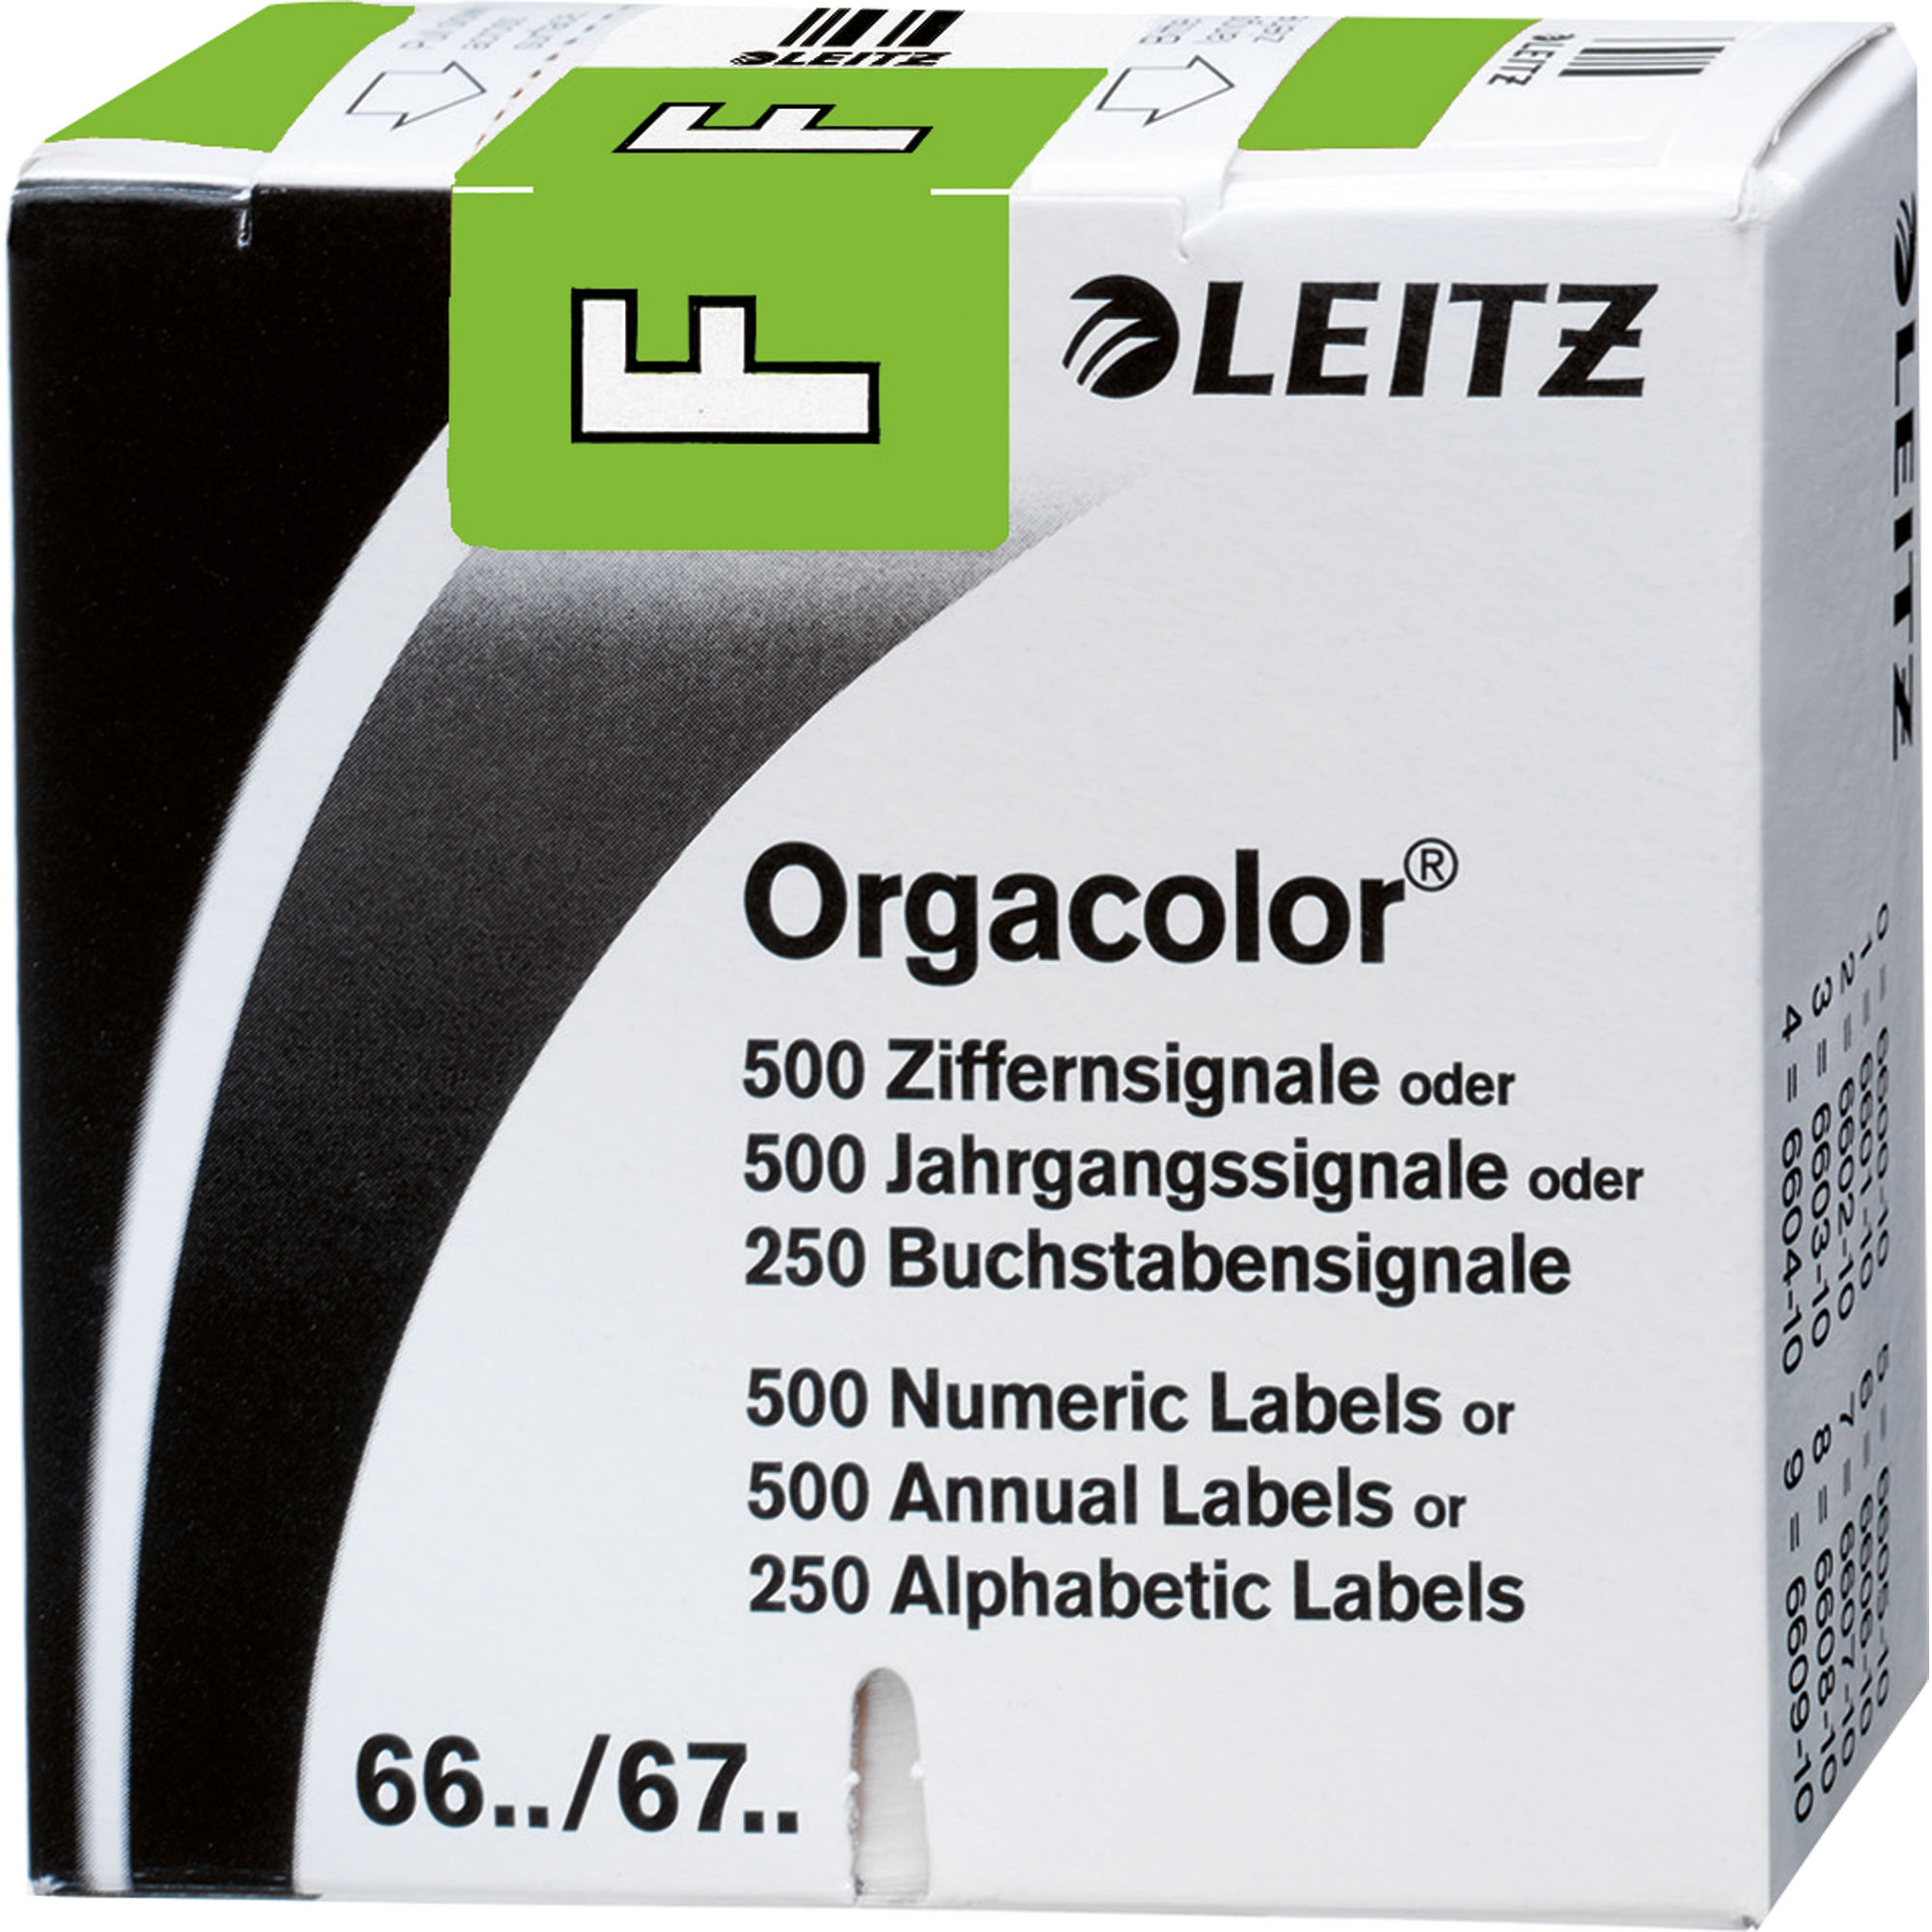 Leitz Buchstabensignal Orgacolor® grün F